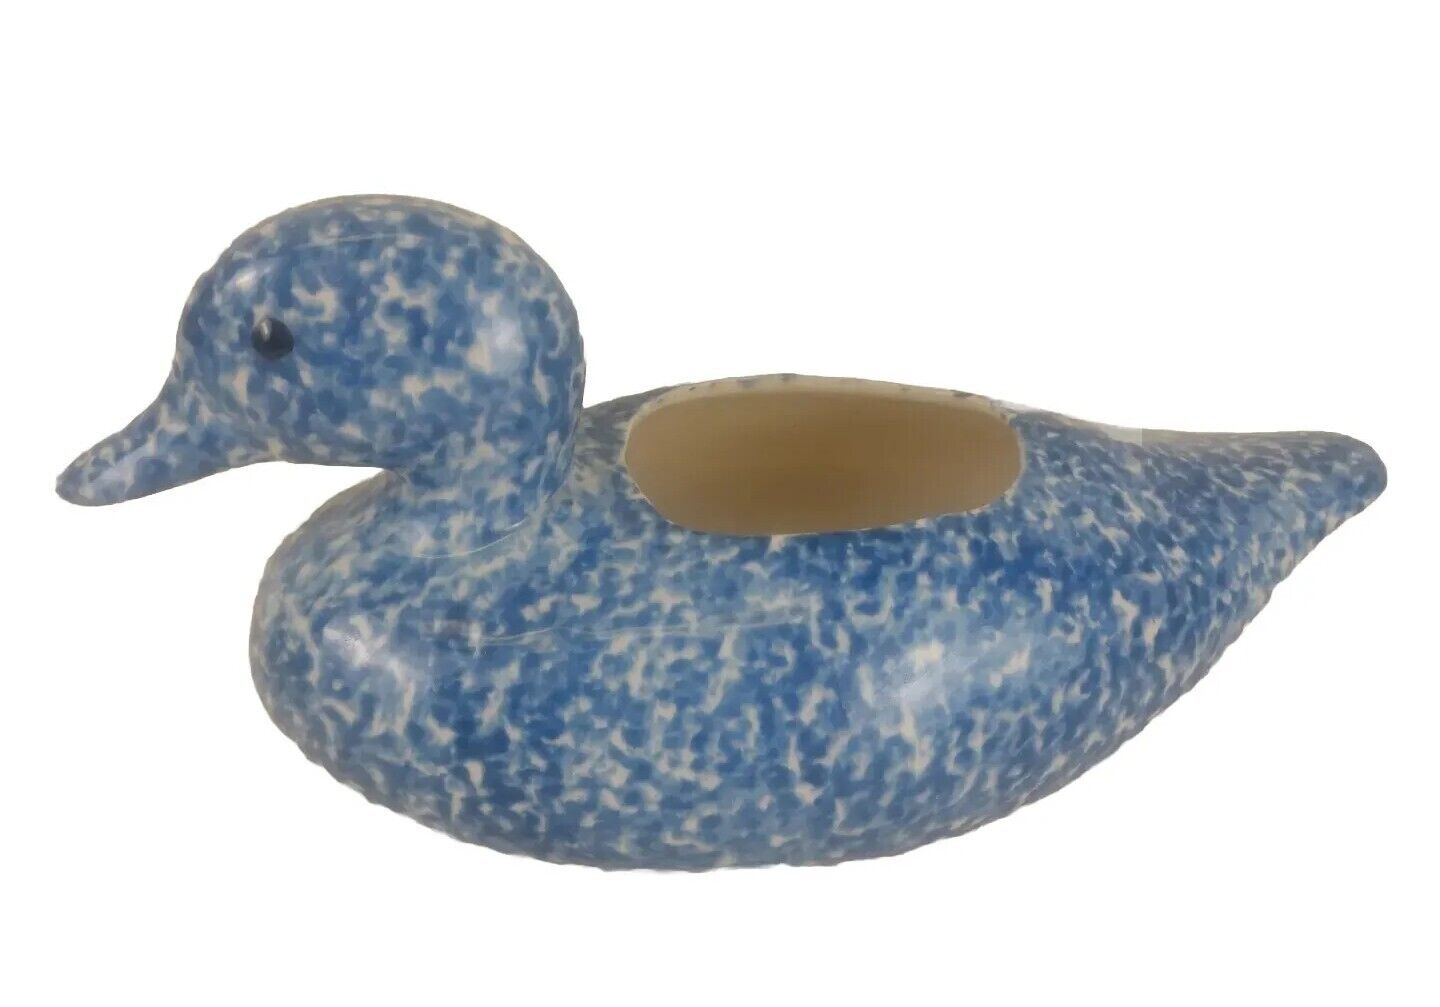 Vintage Duck Planter Ceramic Blue Spongewear Farmhouse Decoration Country 